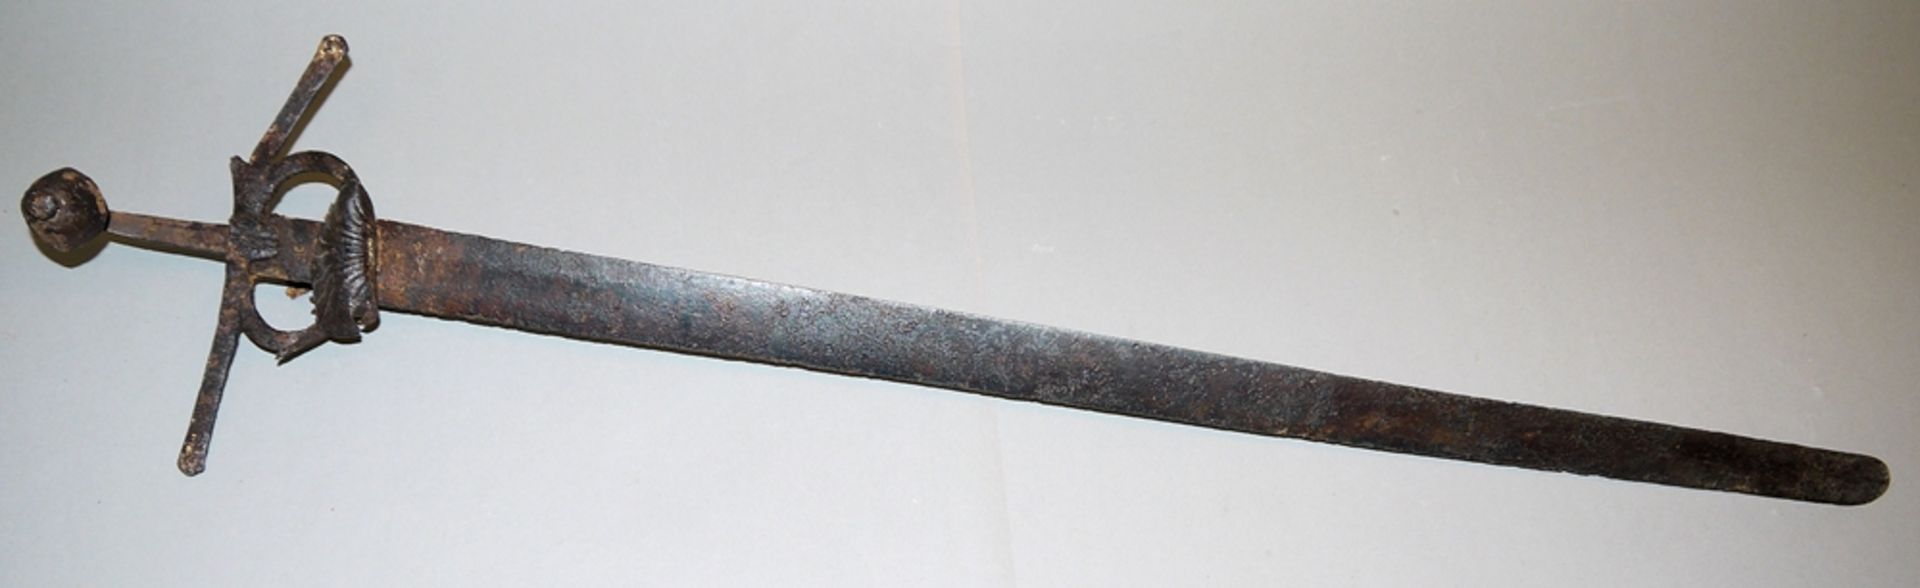 Schwert des Waffenschmiedes Heinrich Coll um 1600